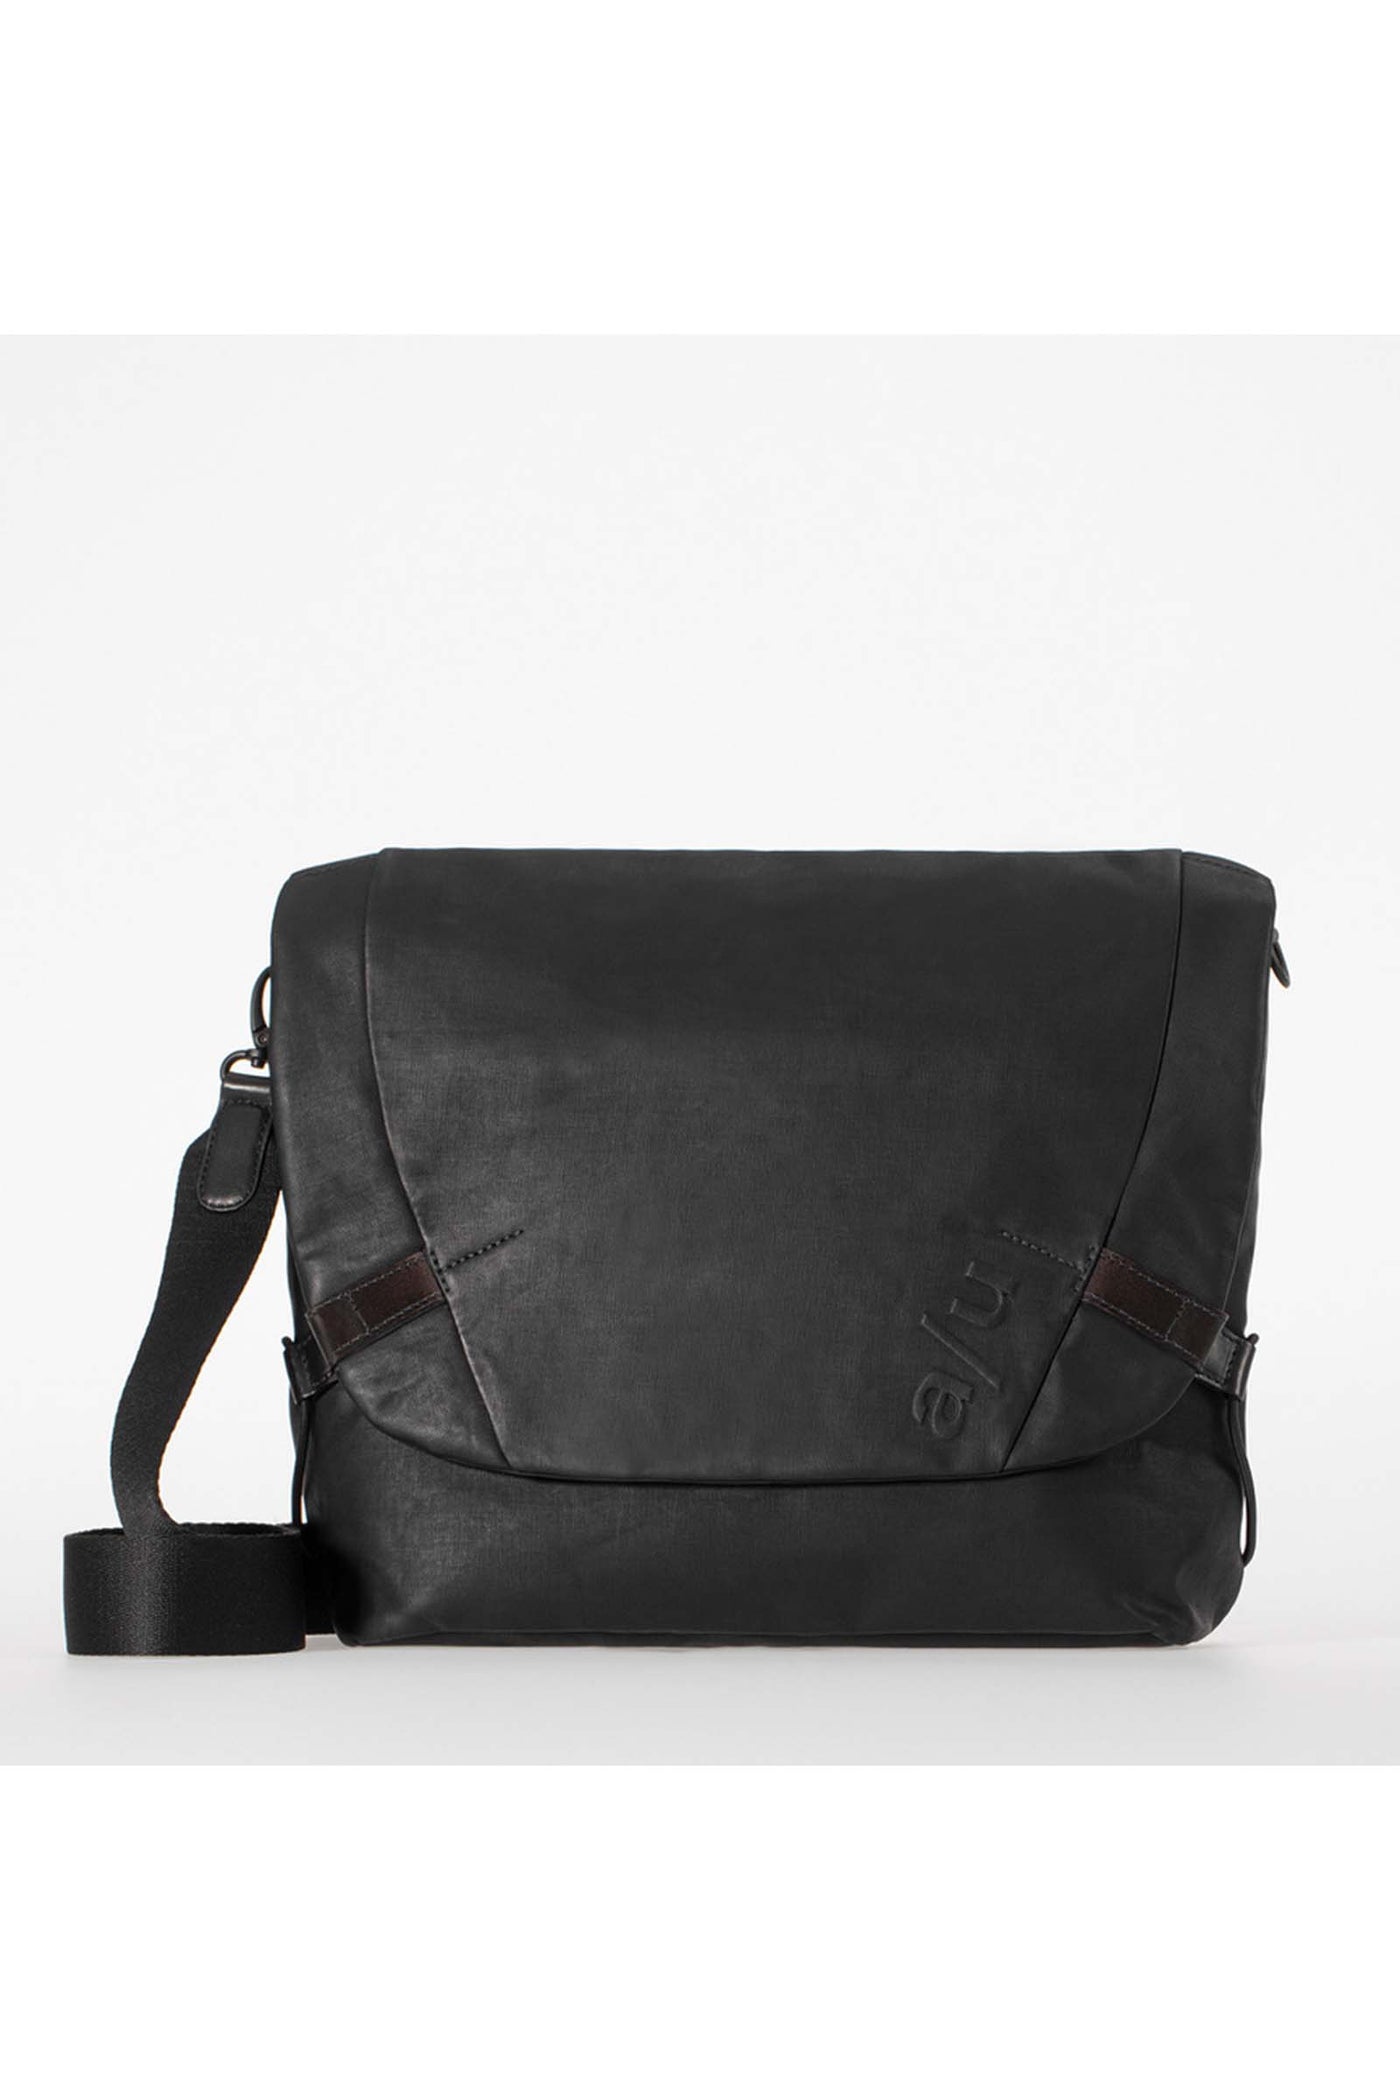 MATSUMOTO Bag black